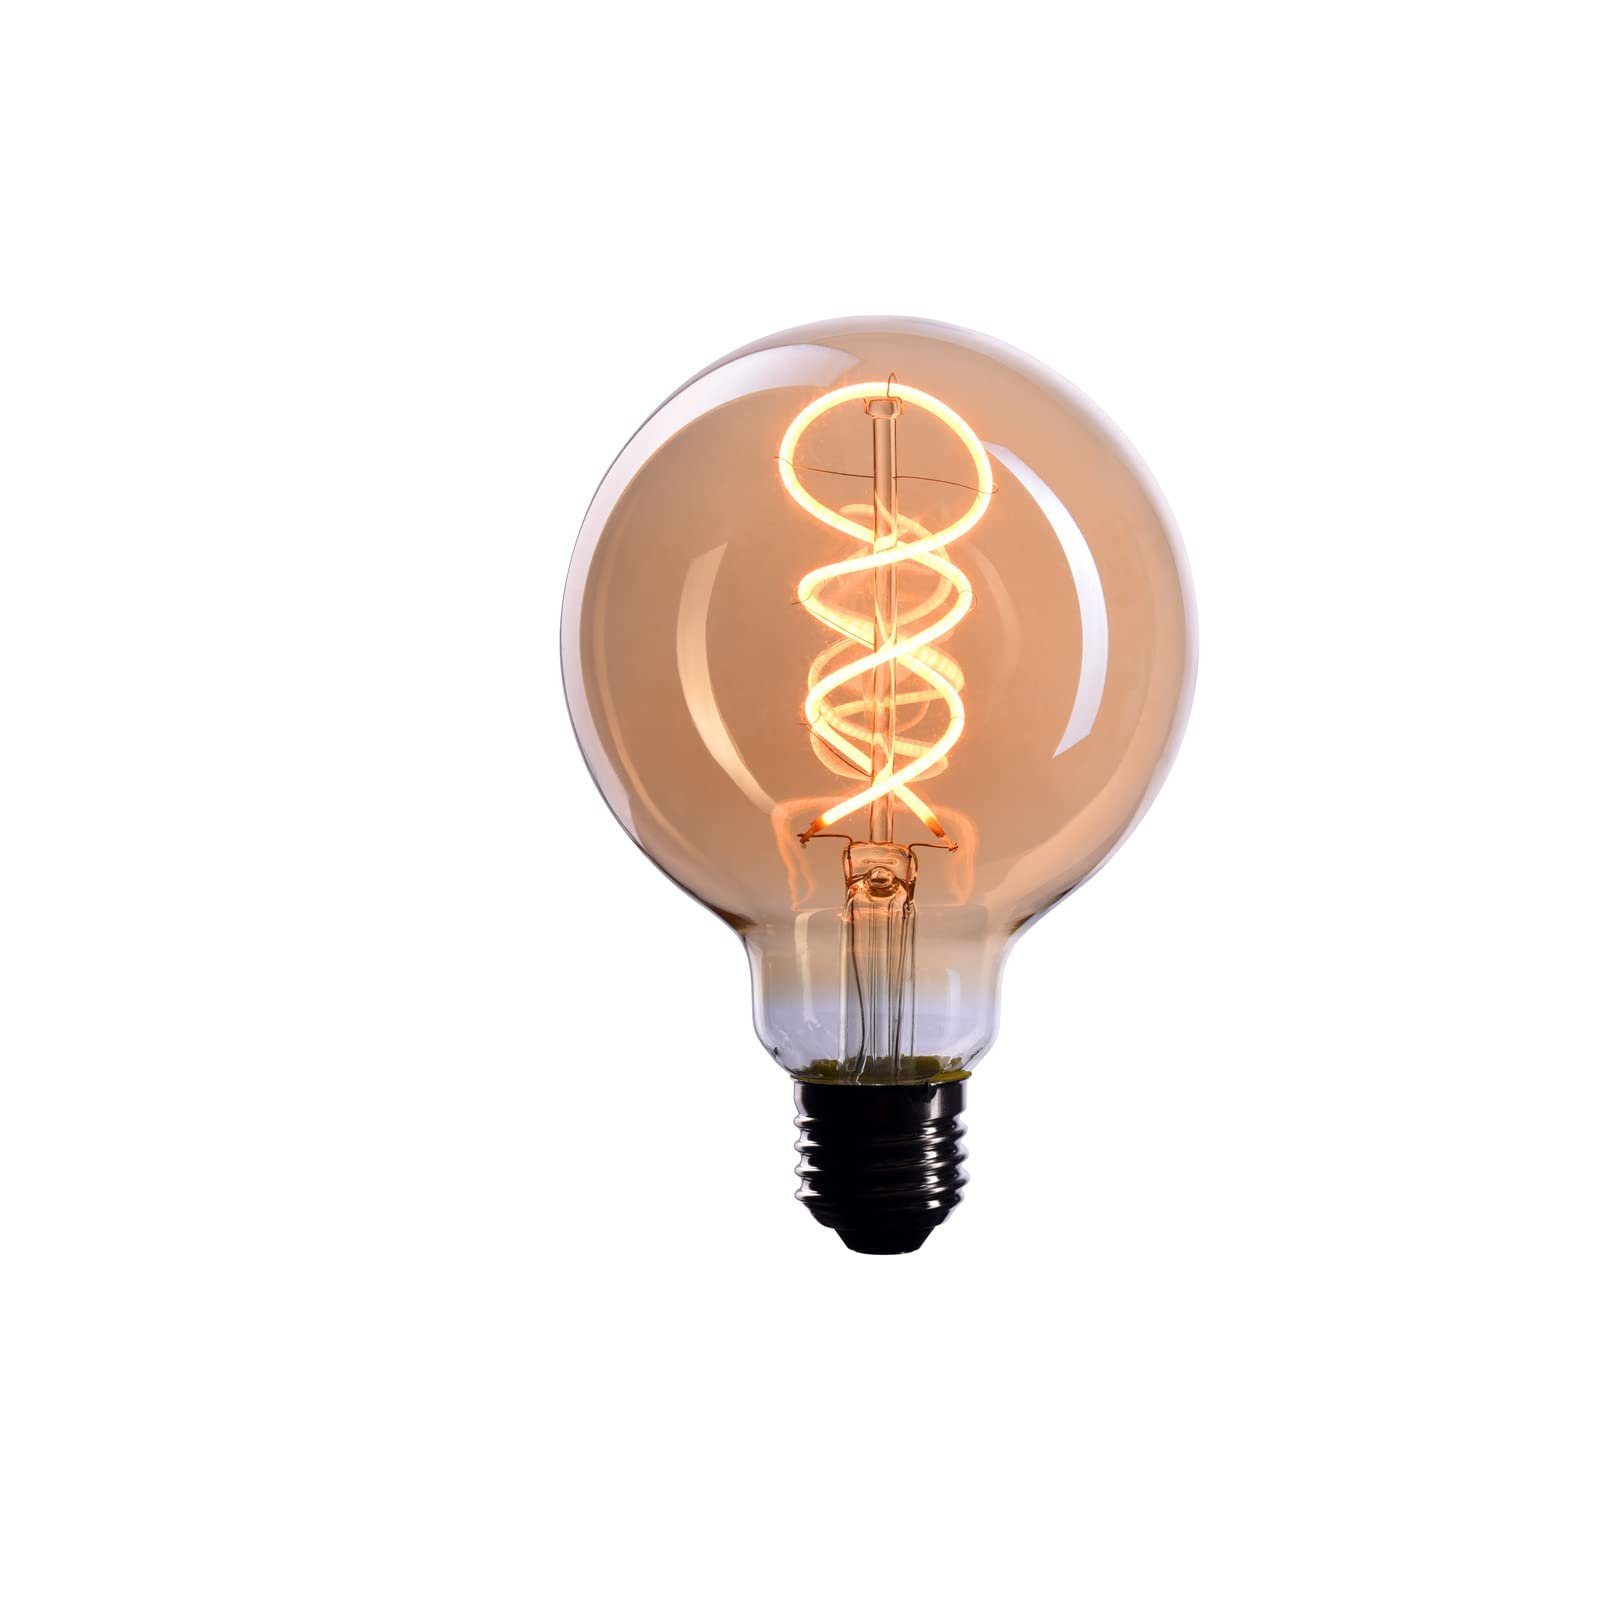 Crown LED LED Edison Glühbirne E27 Fassung, 4W, 2200K, Warmweiß, 230V, EL19  Halogenlampe, Warmweiß 1 Stück (1er Pack)Antik